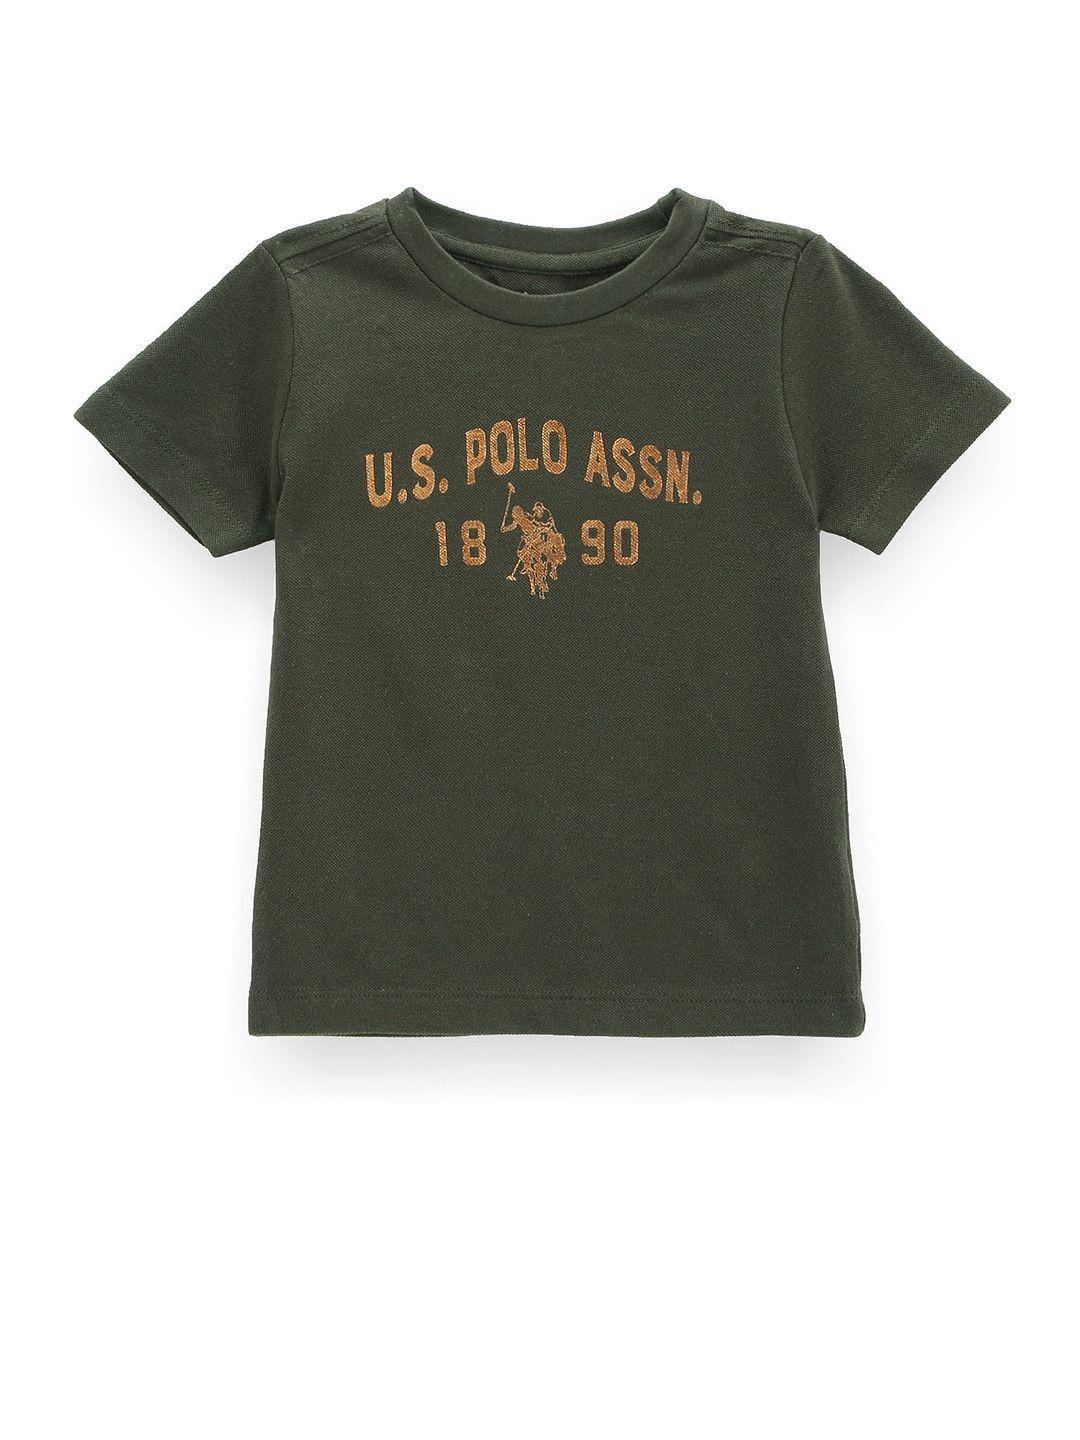 u.s.-polo-assn.-kids-boys-typography-printed-pure-cotton-t-shirt